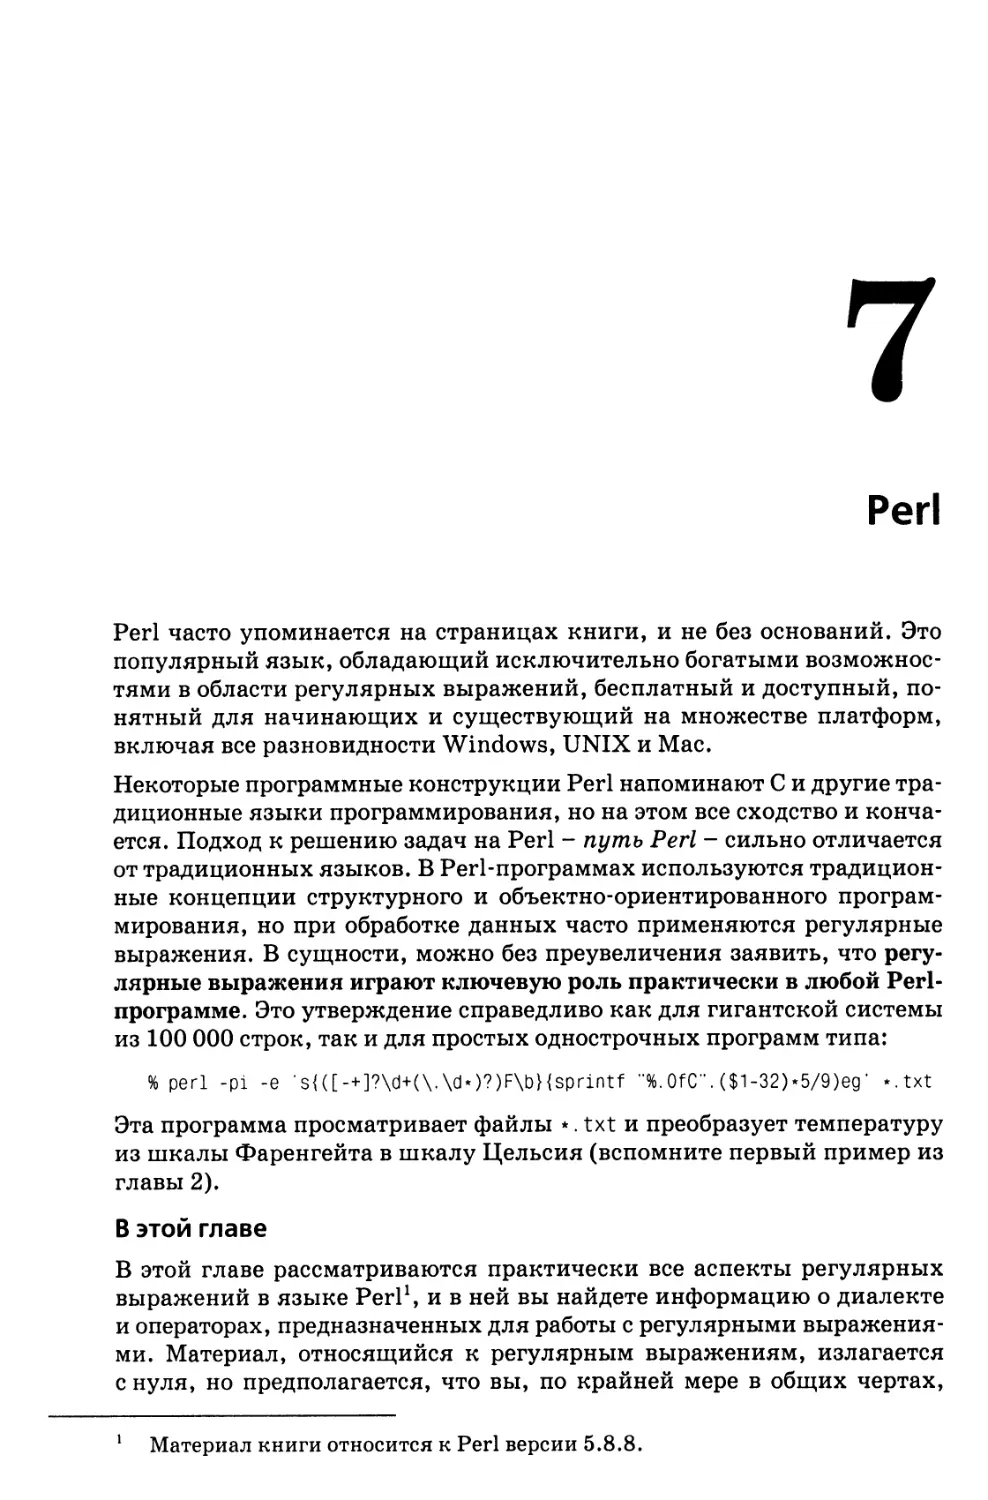 7. Perl